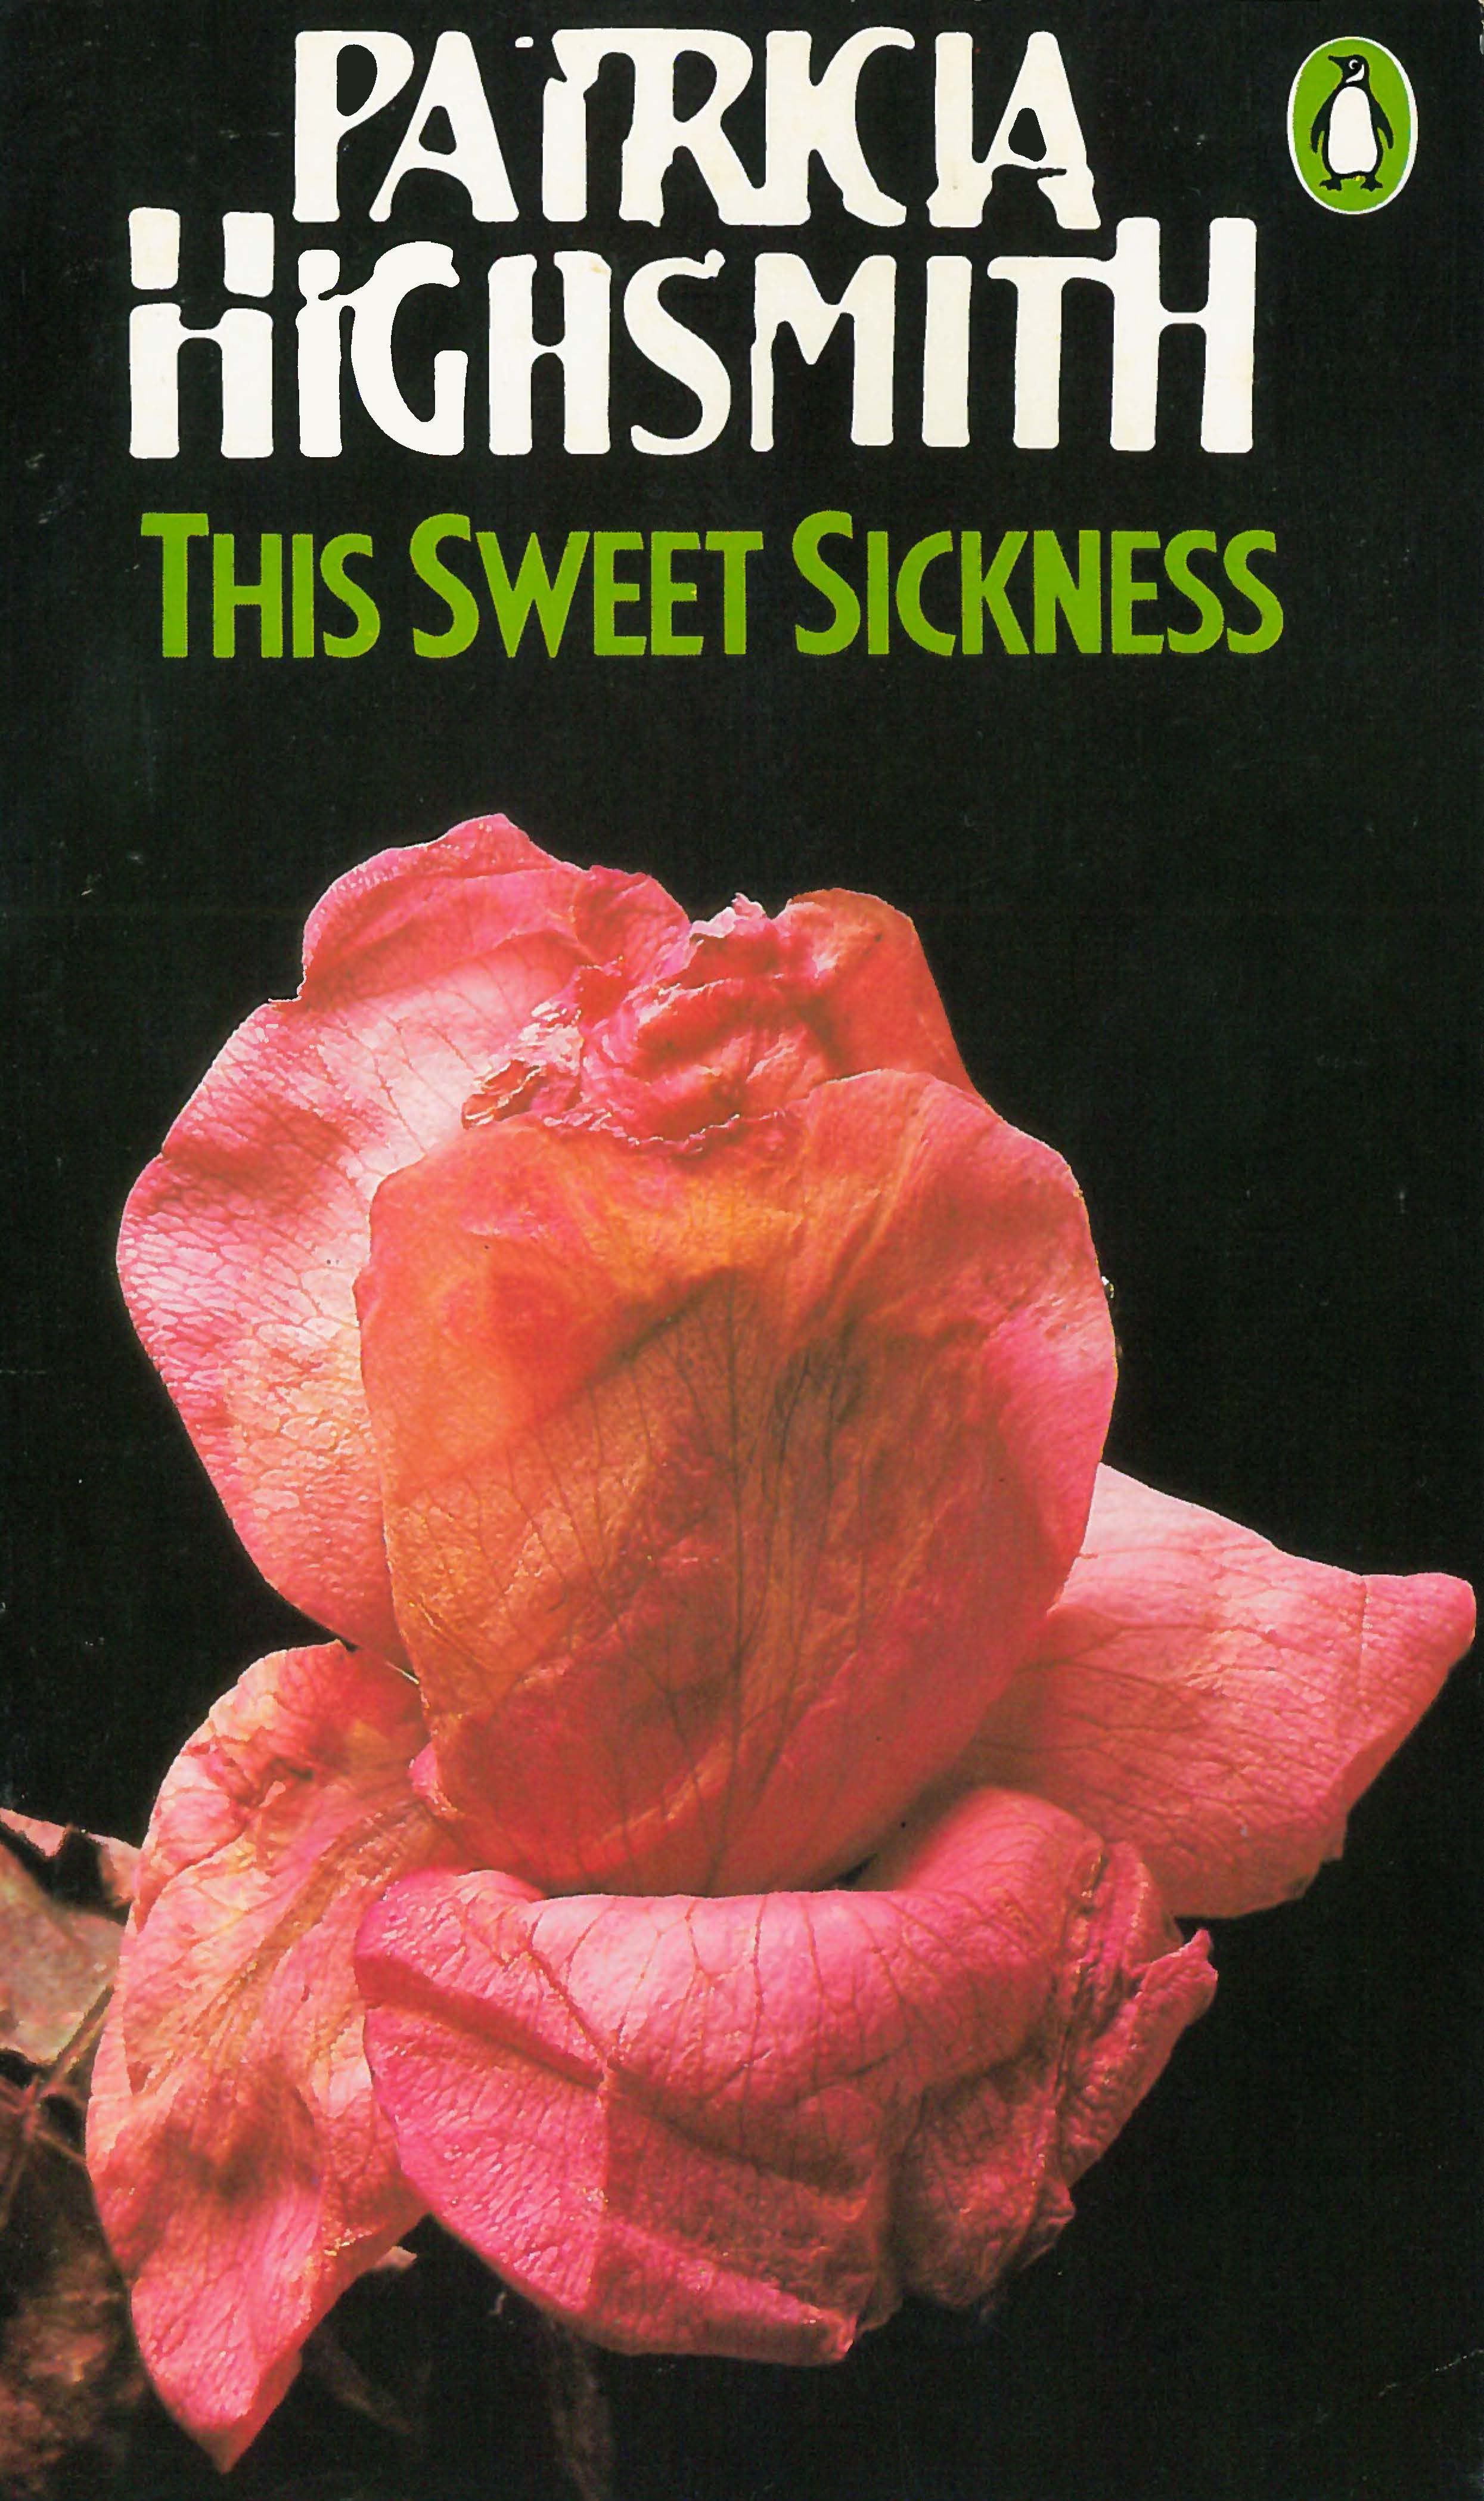 Patricia Highsmith - This Sweet Sickness